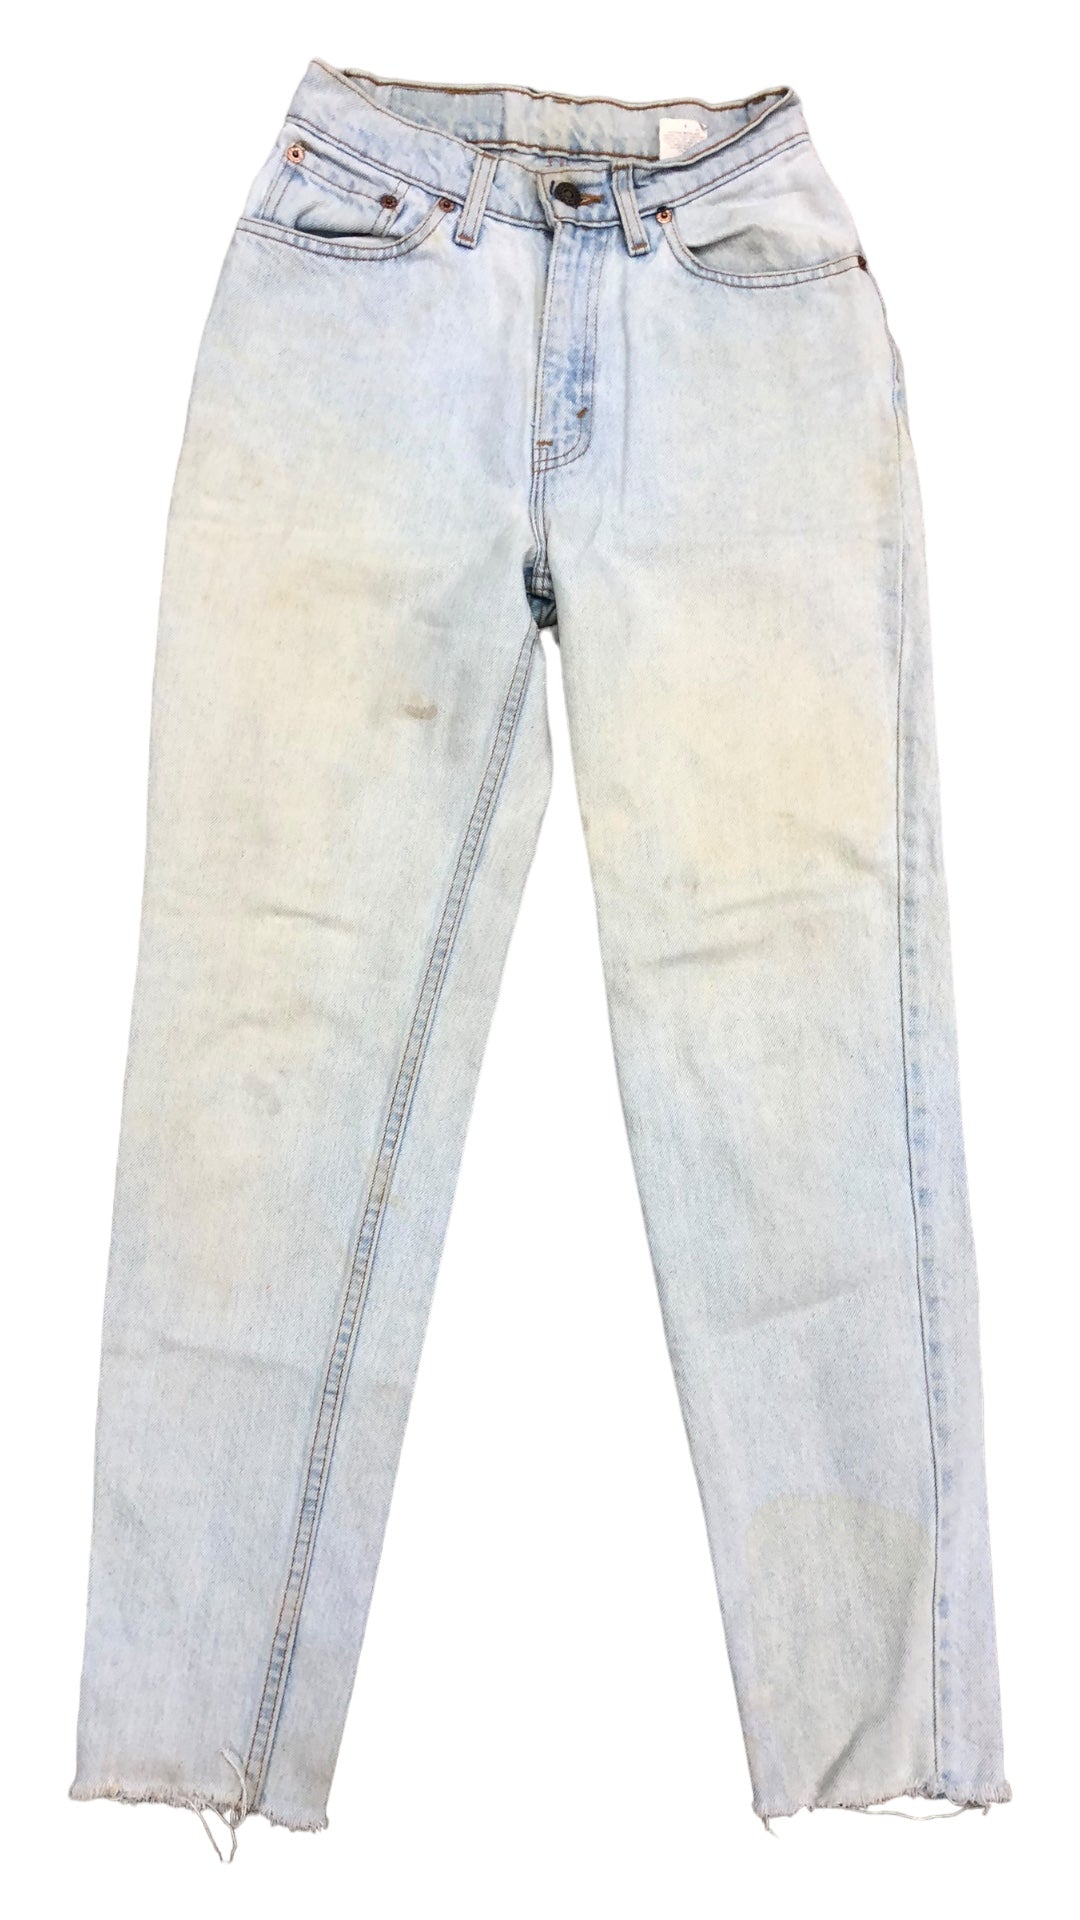 VTG Levi's 512 Slim Tapered Light Wash Denim Jeans Sz 26x29